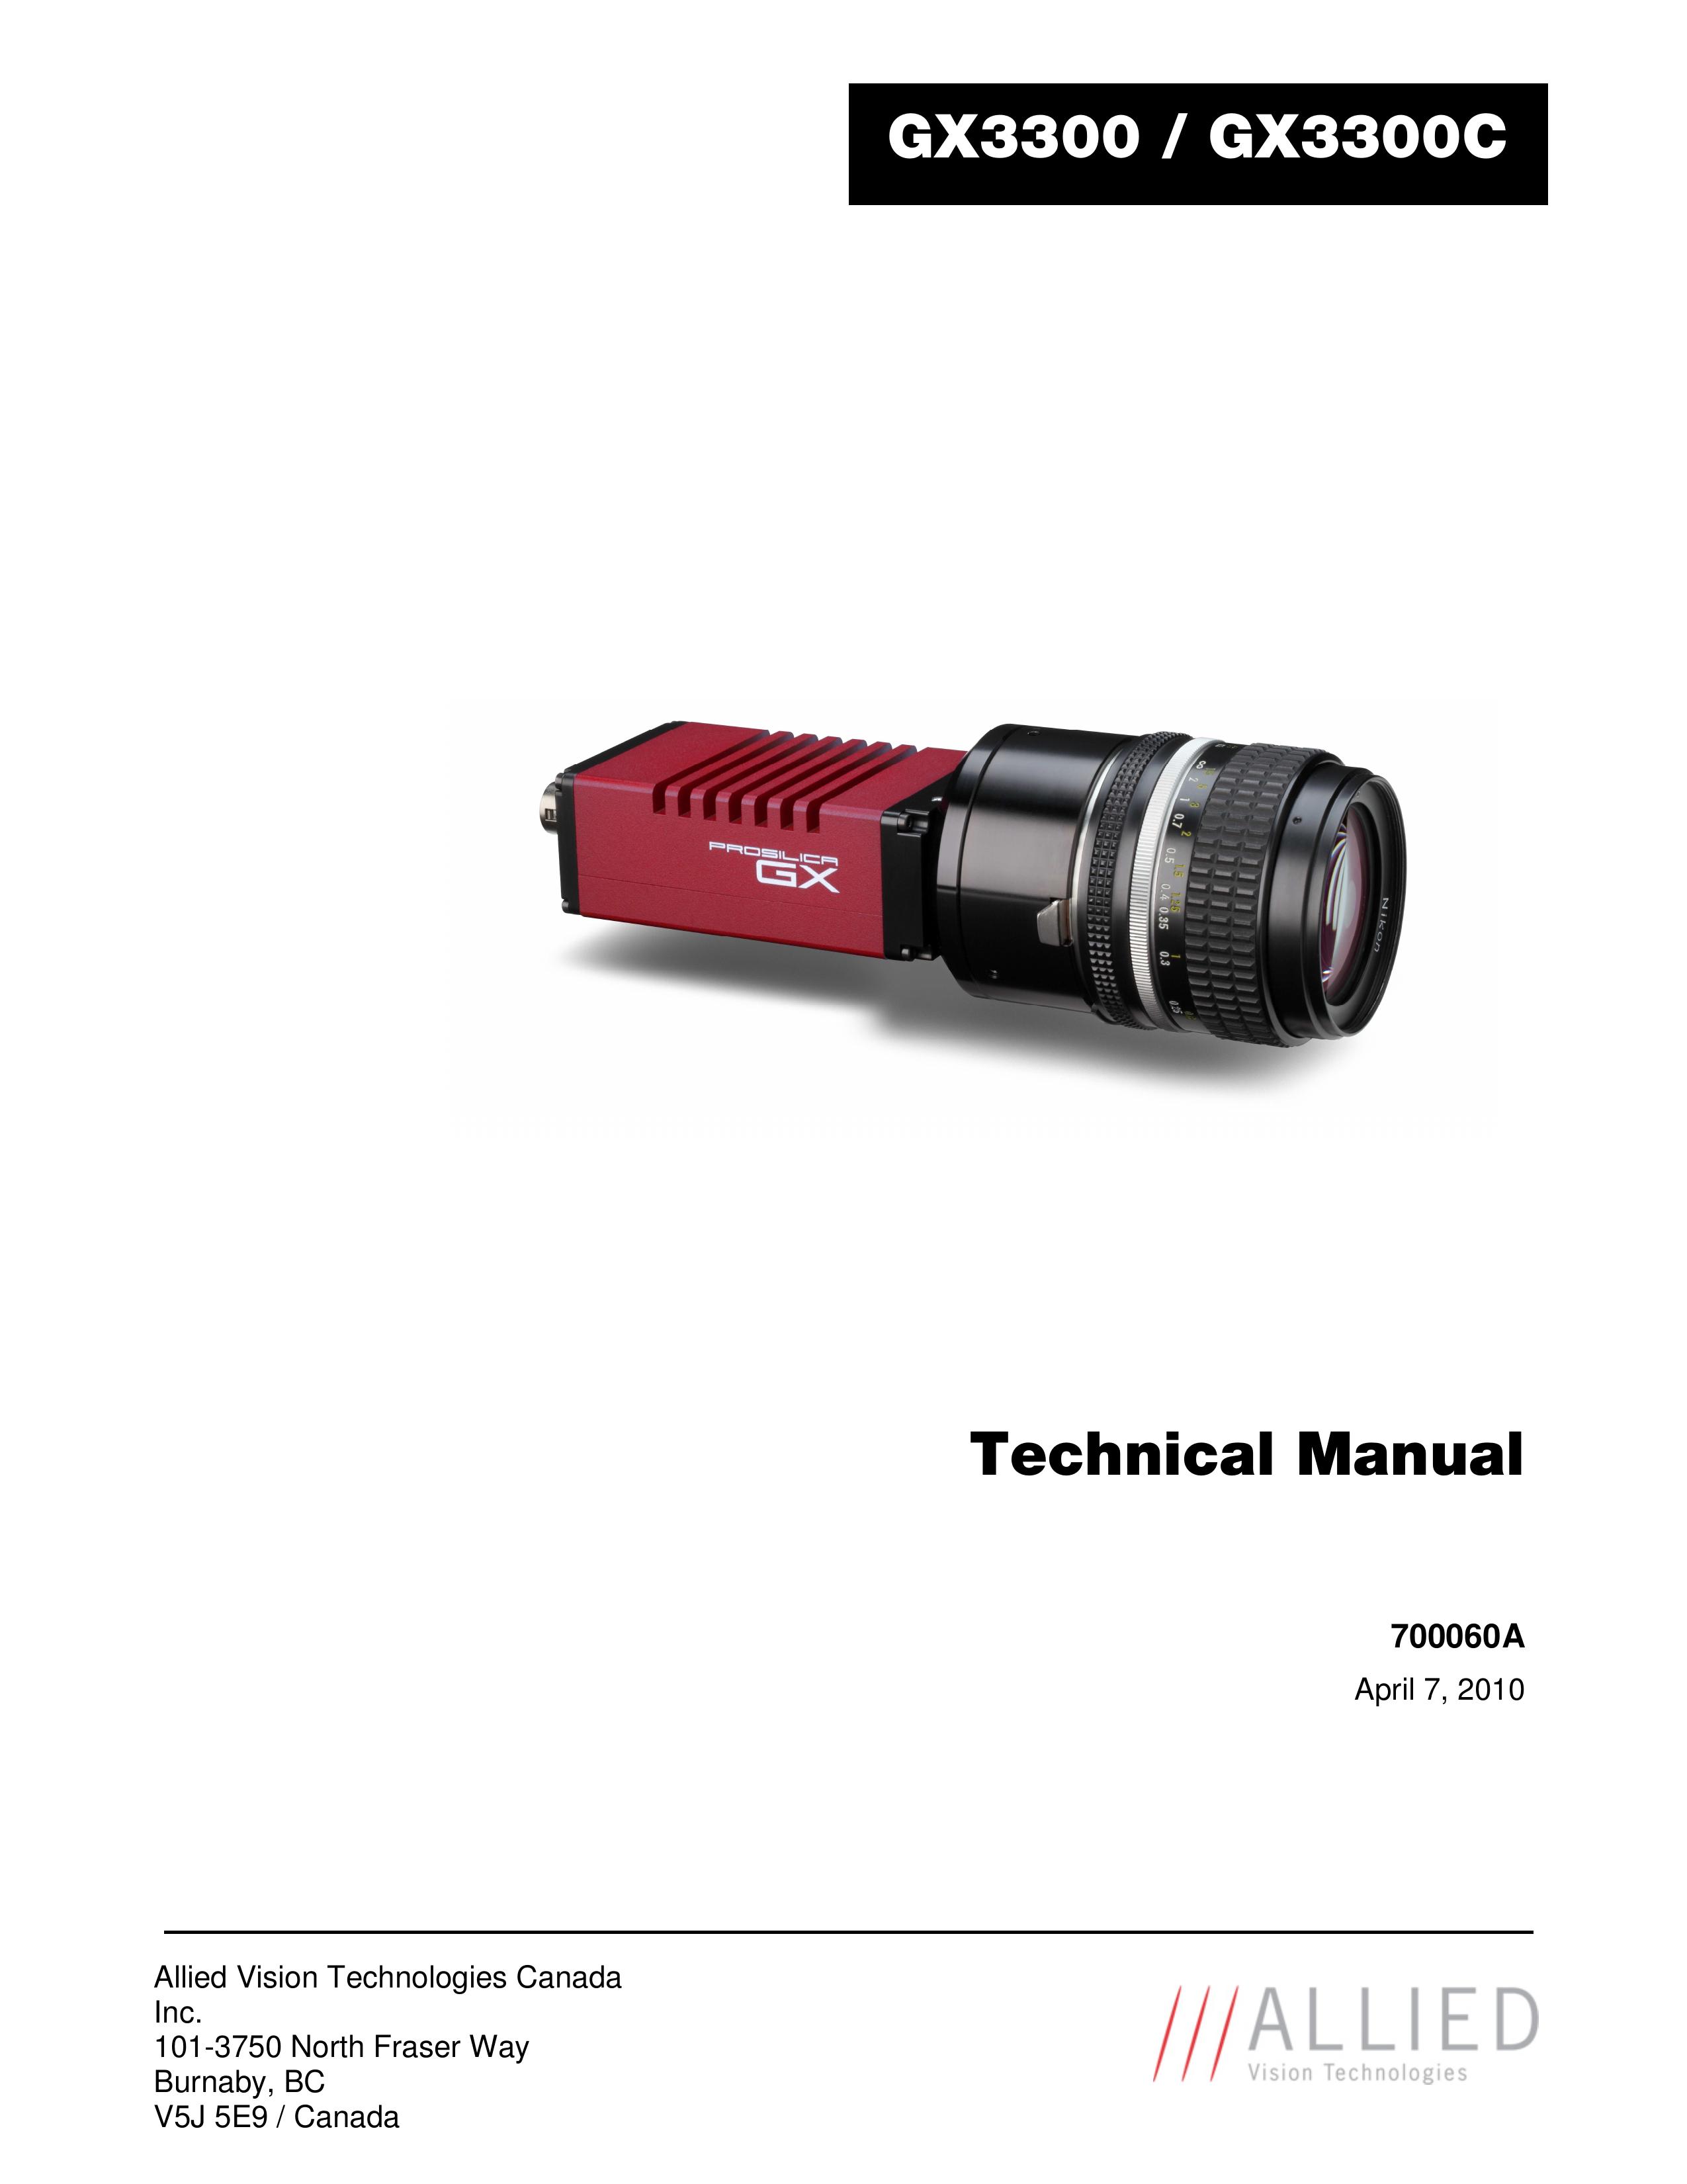 Allied International GX3300C Digital Camera User Manual